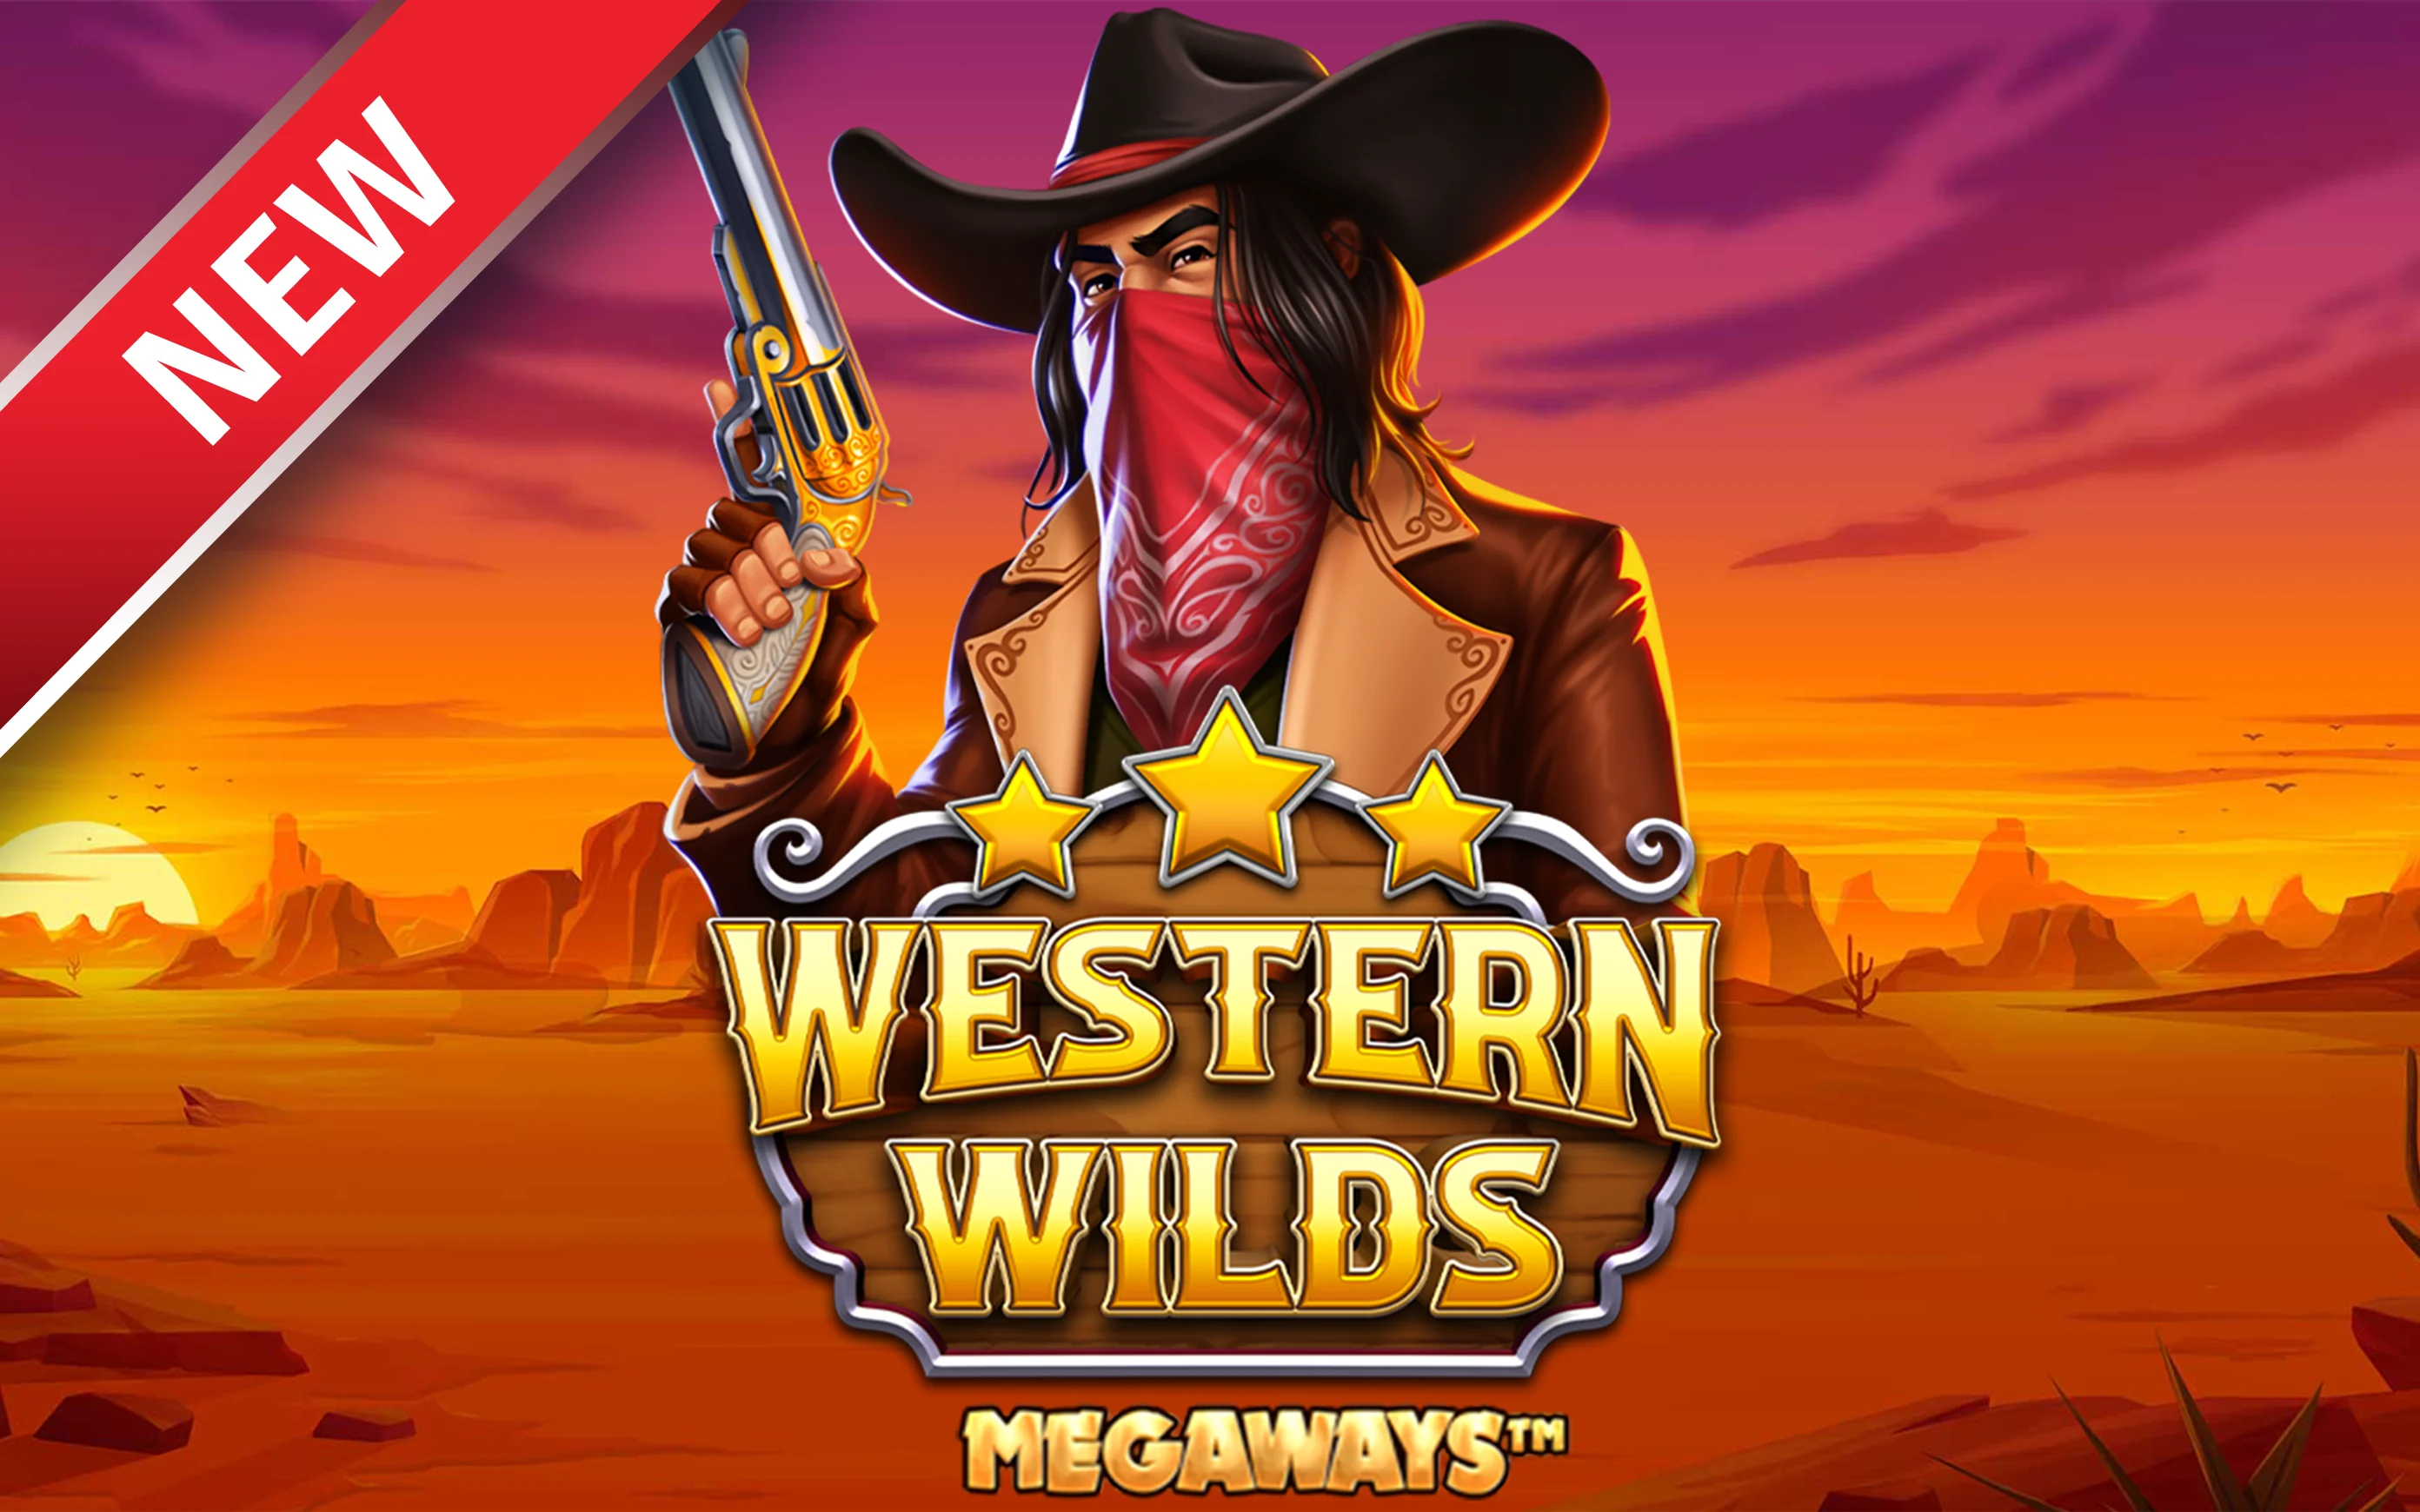 Speel Western Wilds Megaways op Starcasino.be online casino